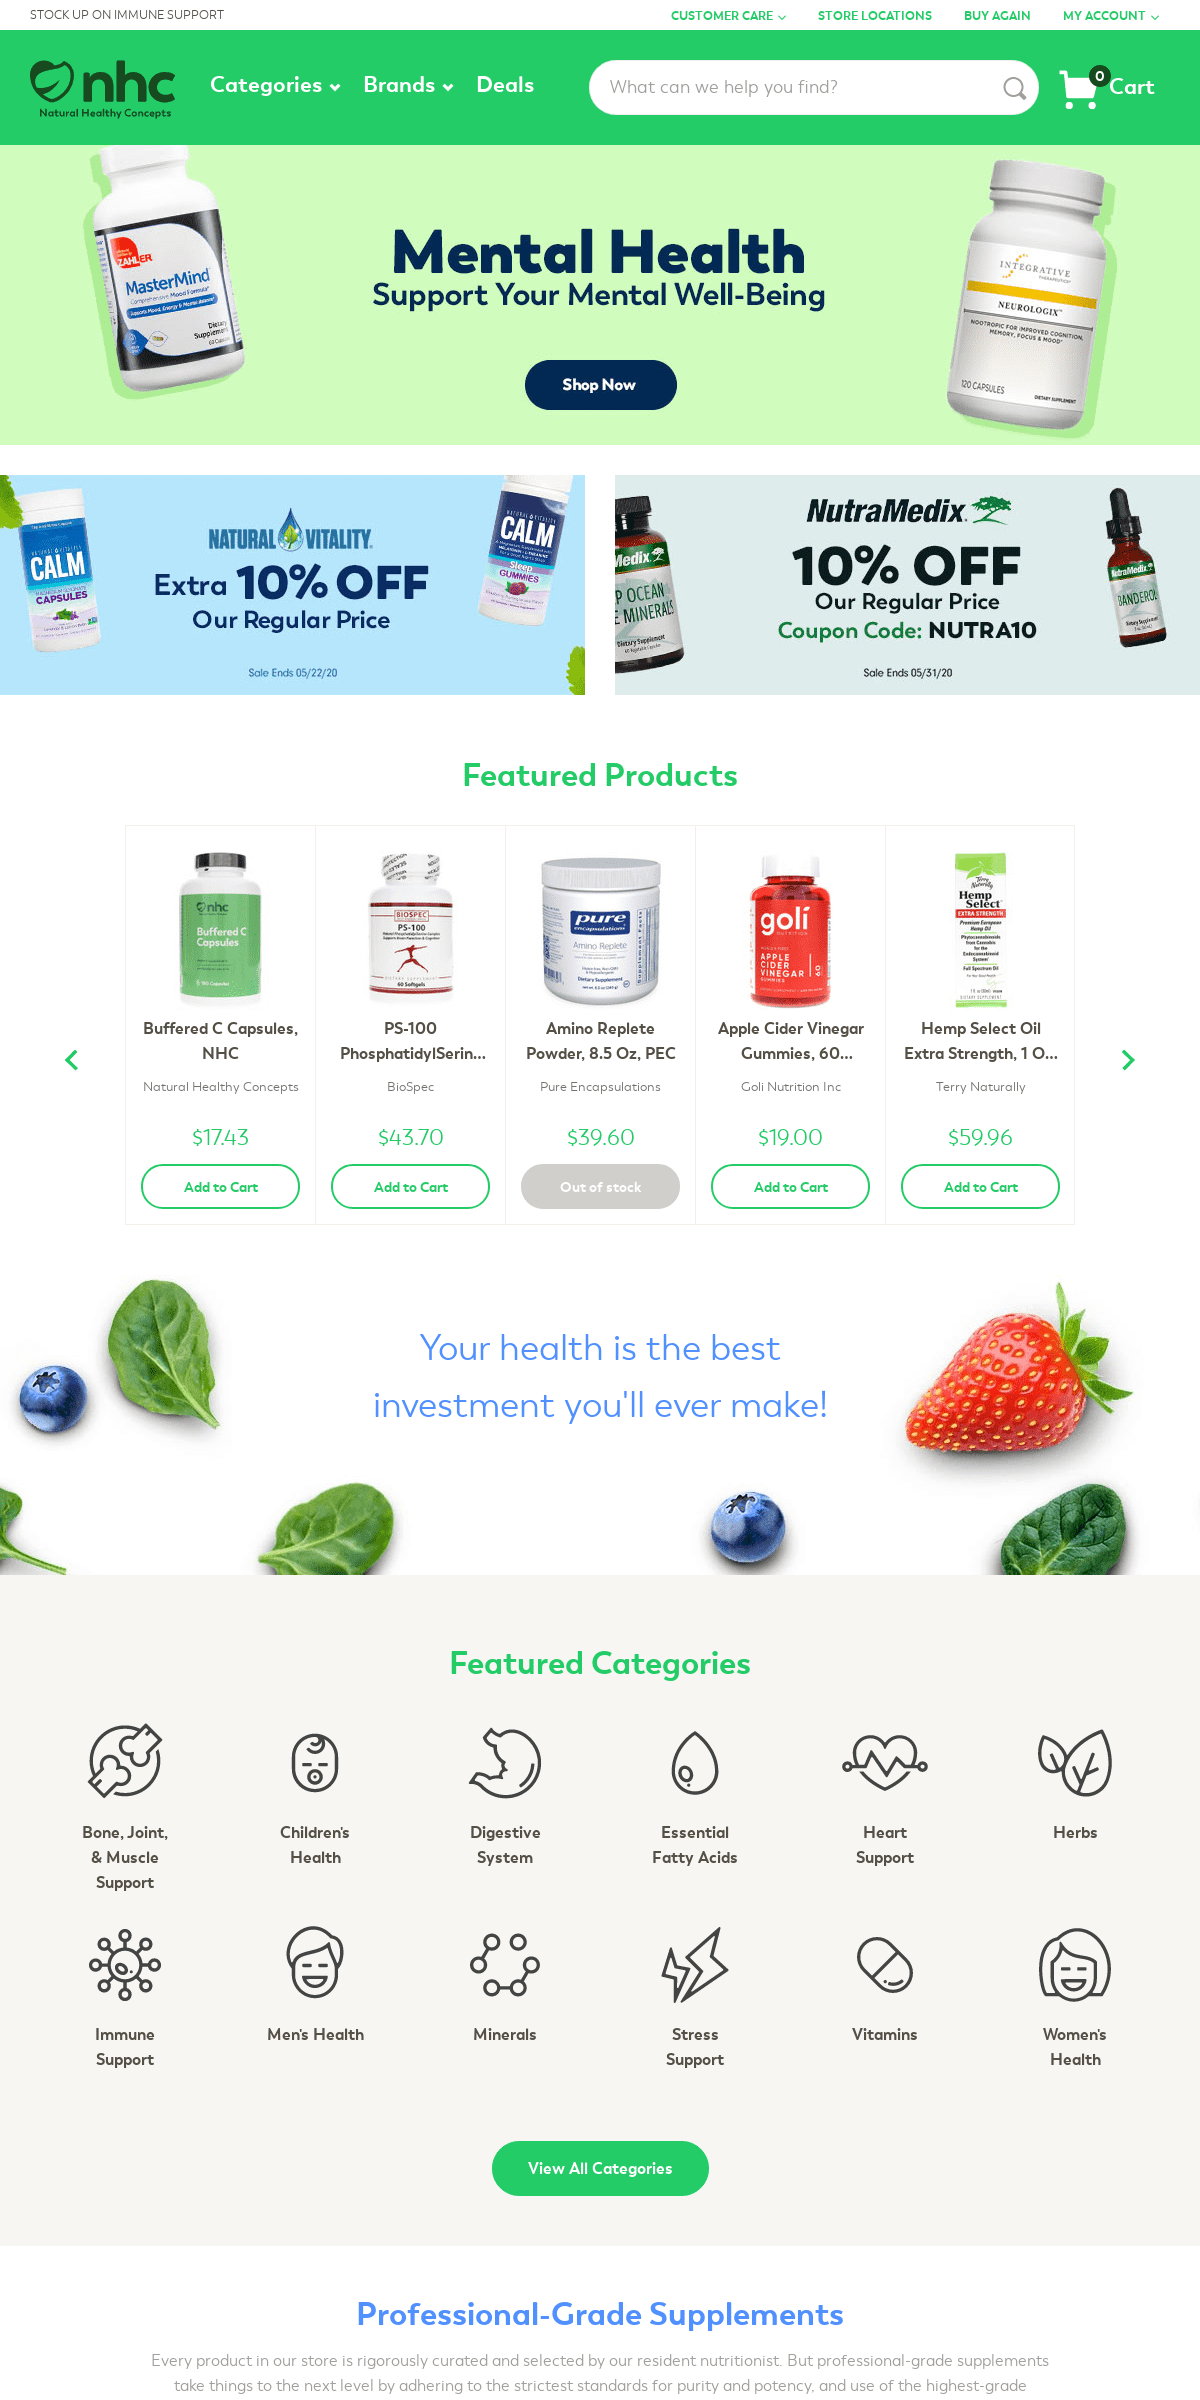 A complete backup of naturalhealthyconcepts.com